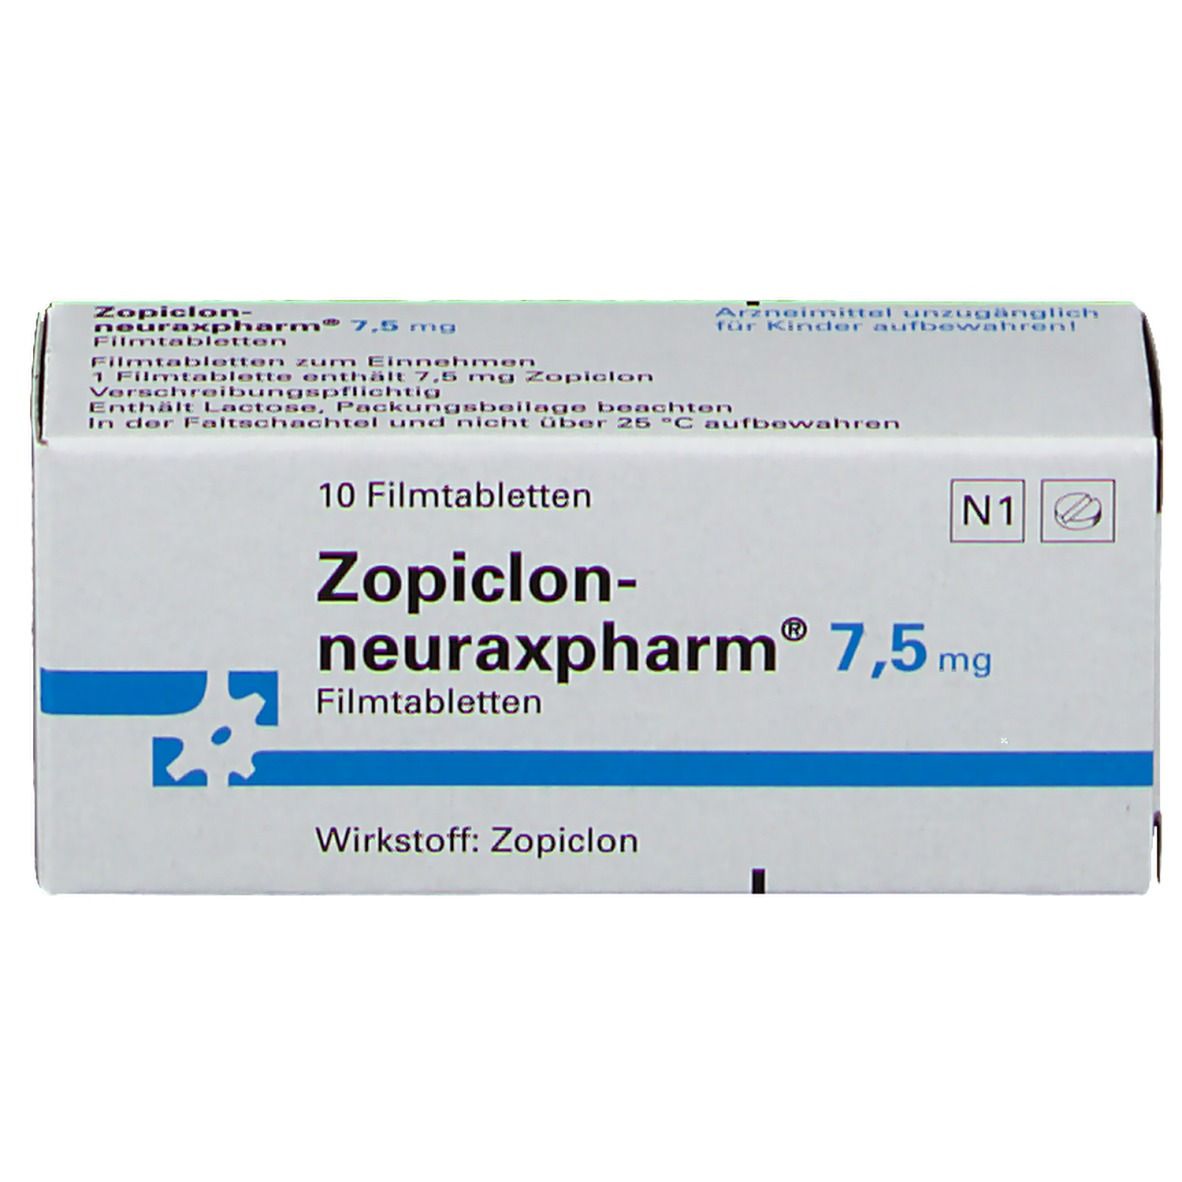 Zopiclon-neuraxpharm® 7,5 mg